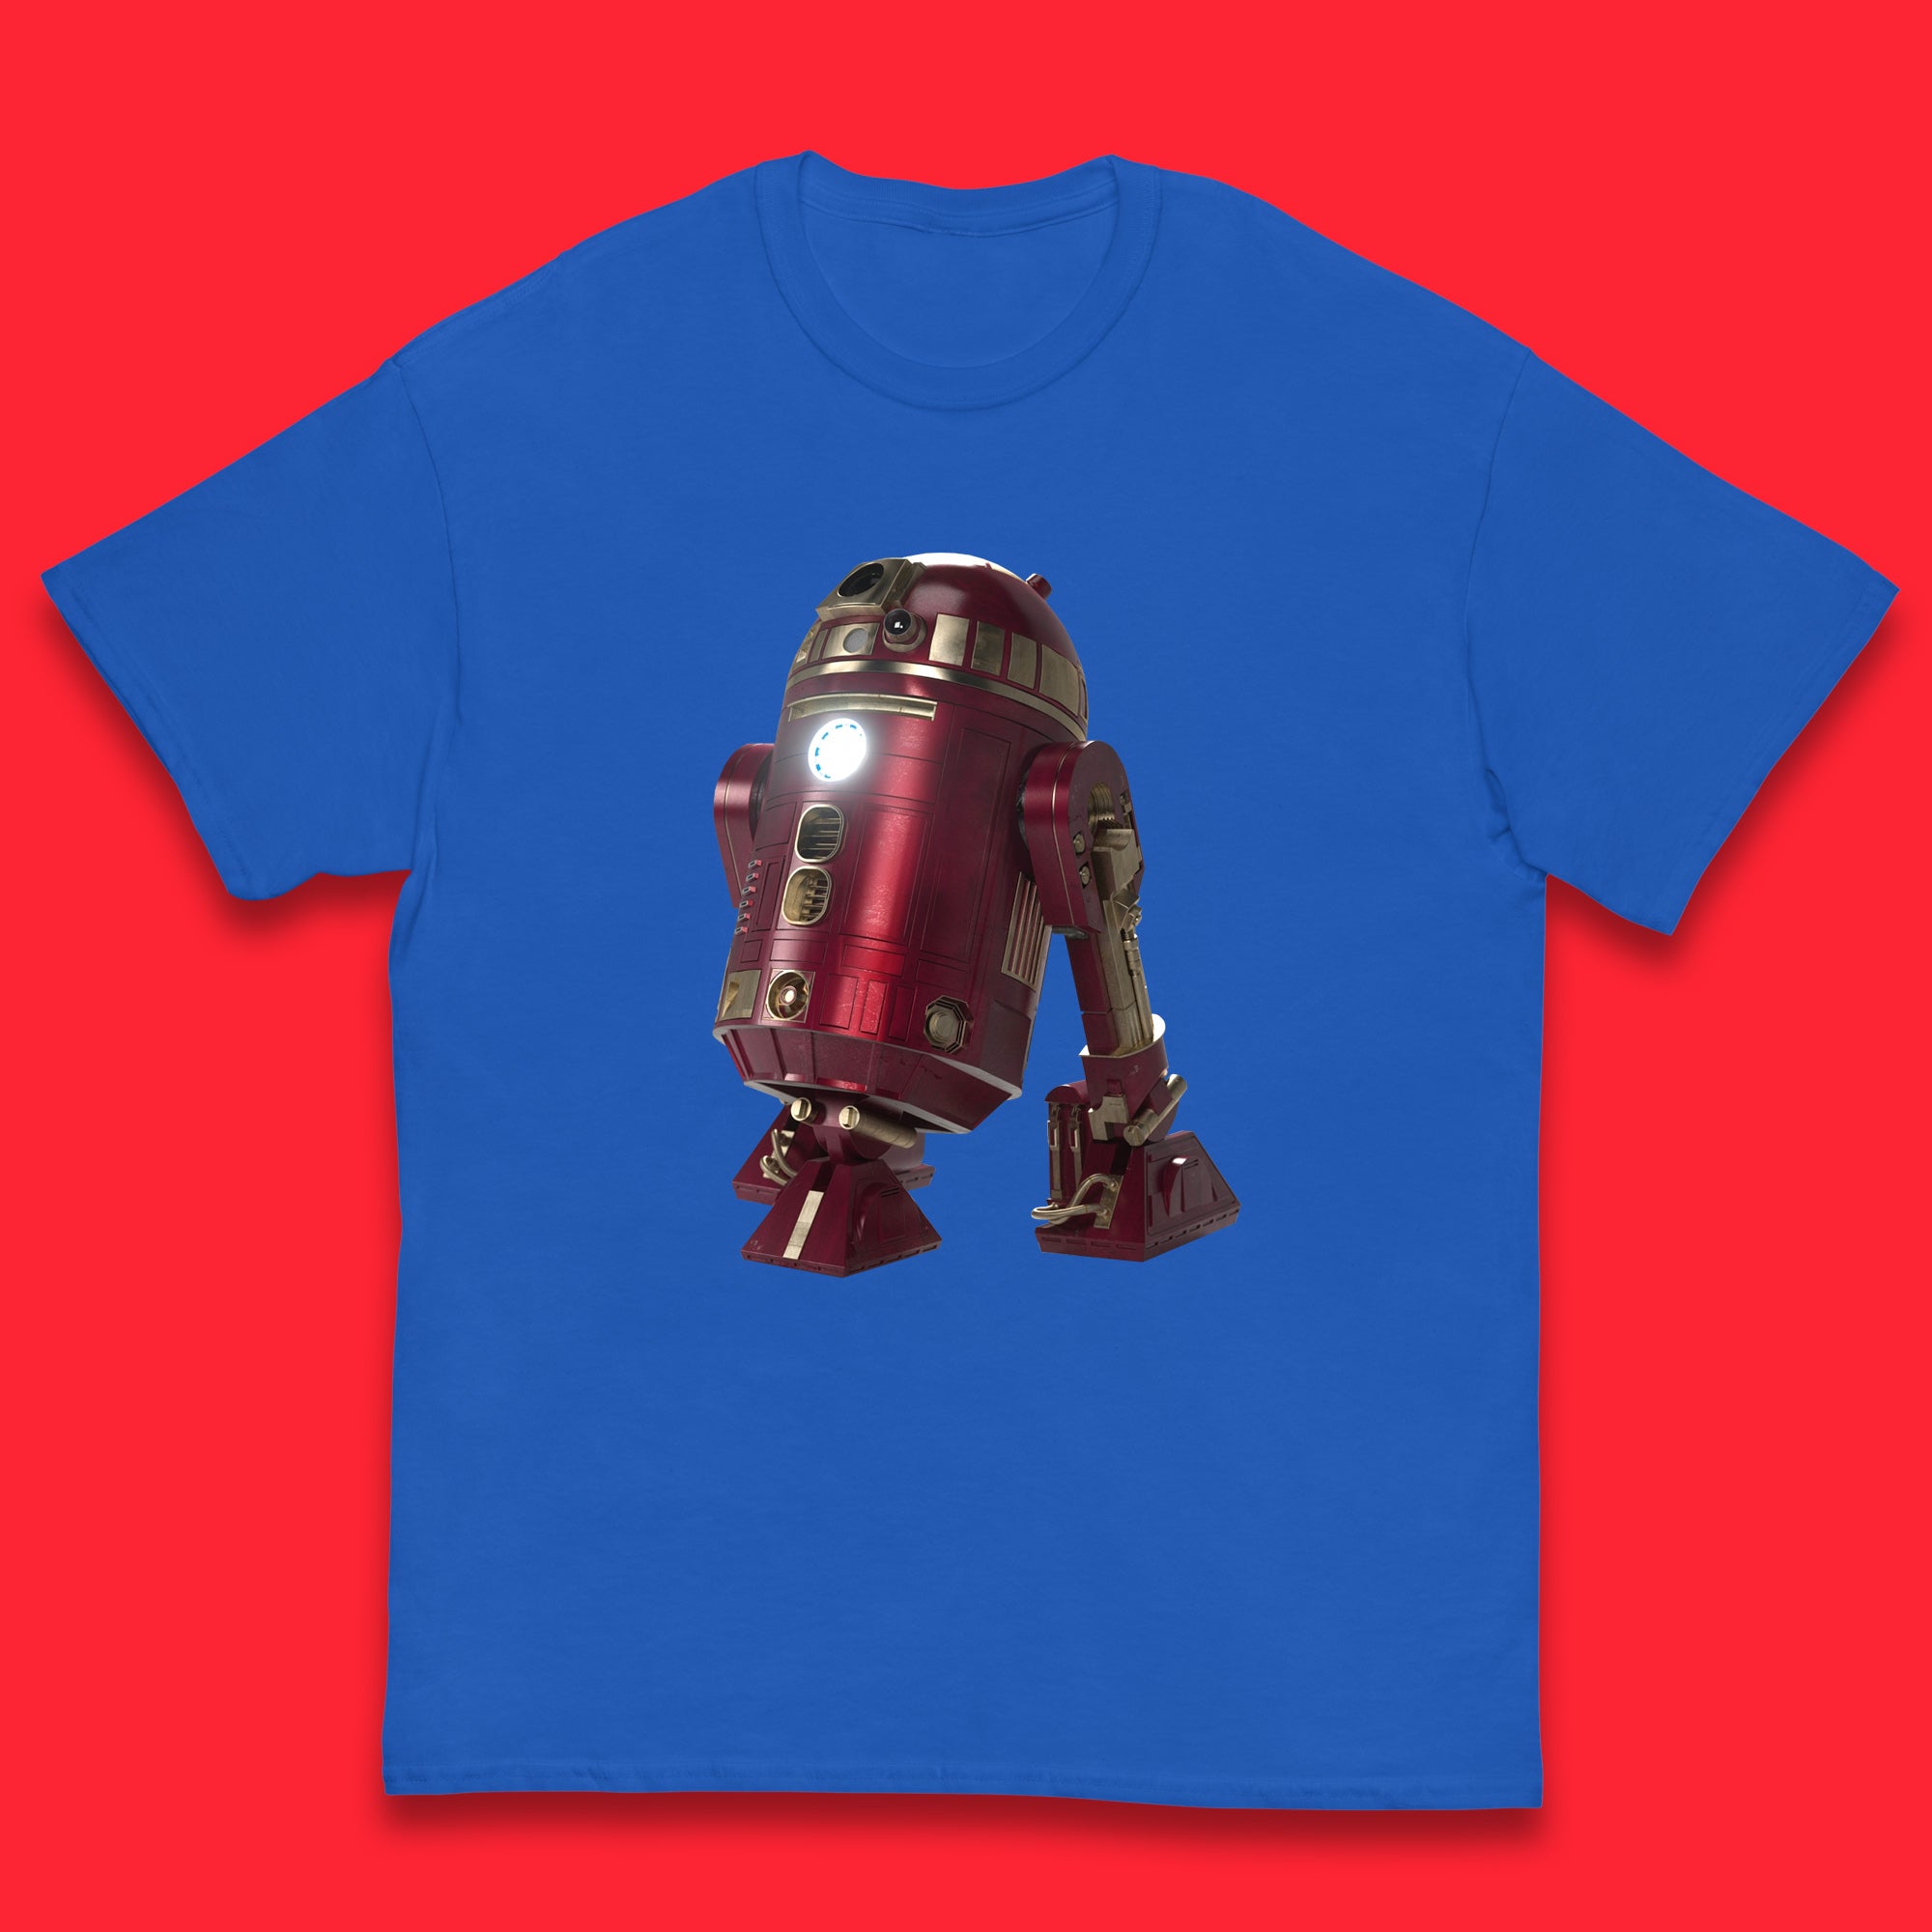 The Iron Man Spoof R2-D2 The Clone Wars Galaxy's Edge Trip R2D2 Ready To Rock Star Wars 46th Anniversary Kids T Shirt